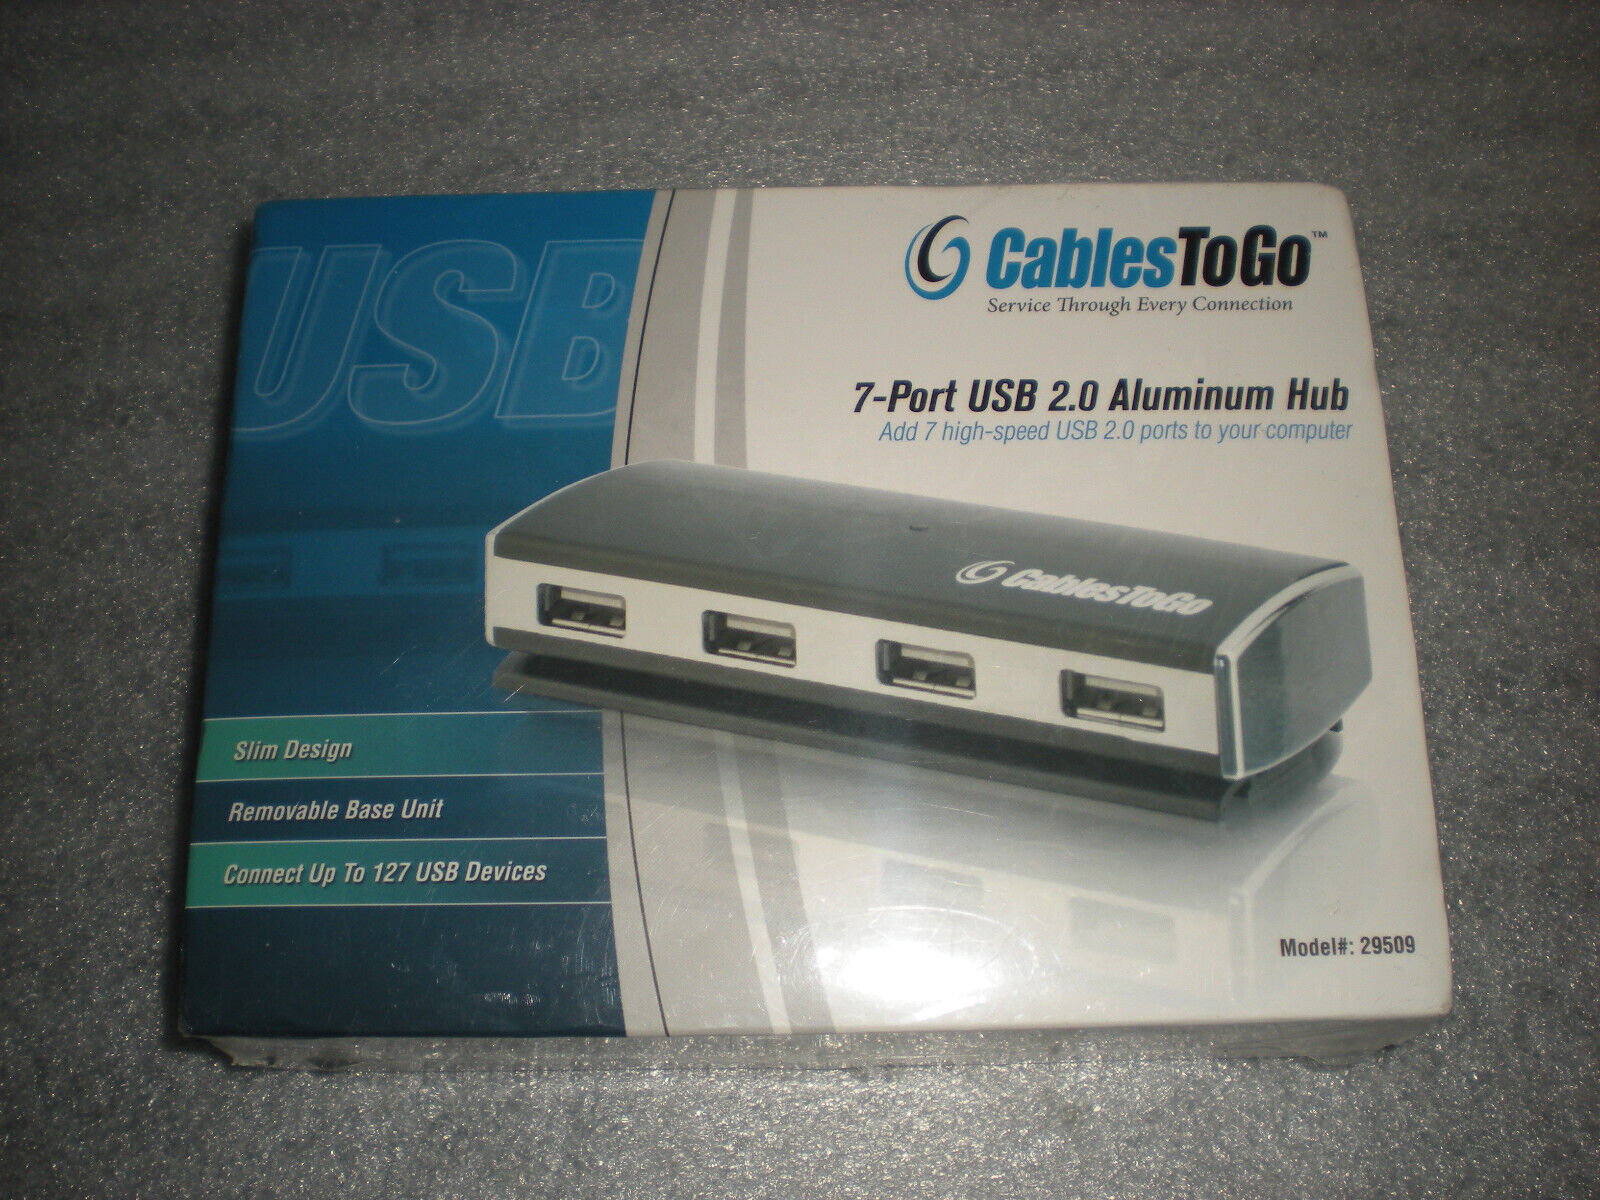 New Sealed Cables to Go USB 2.0 Hi-Speed Aluminum Hub 7-Port #29509 Slim Design